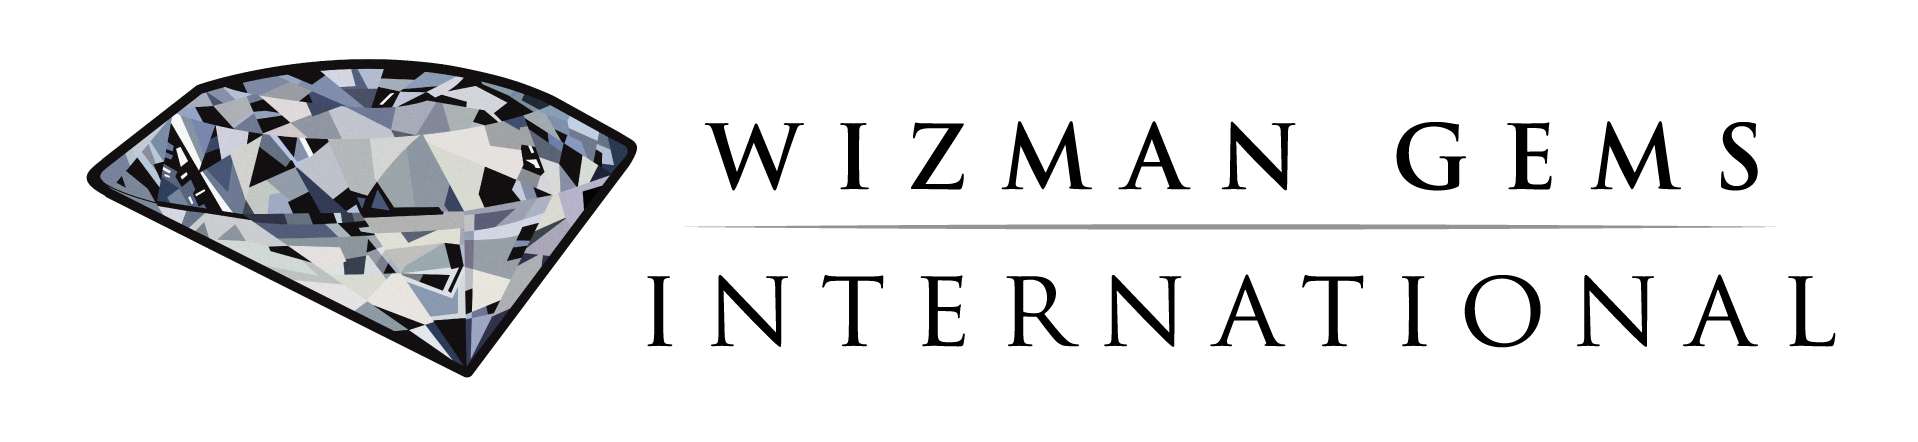 Wizman Gems International